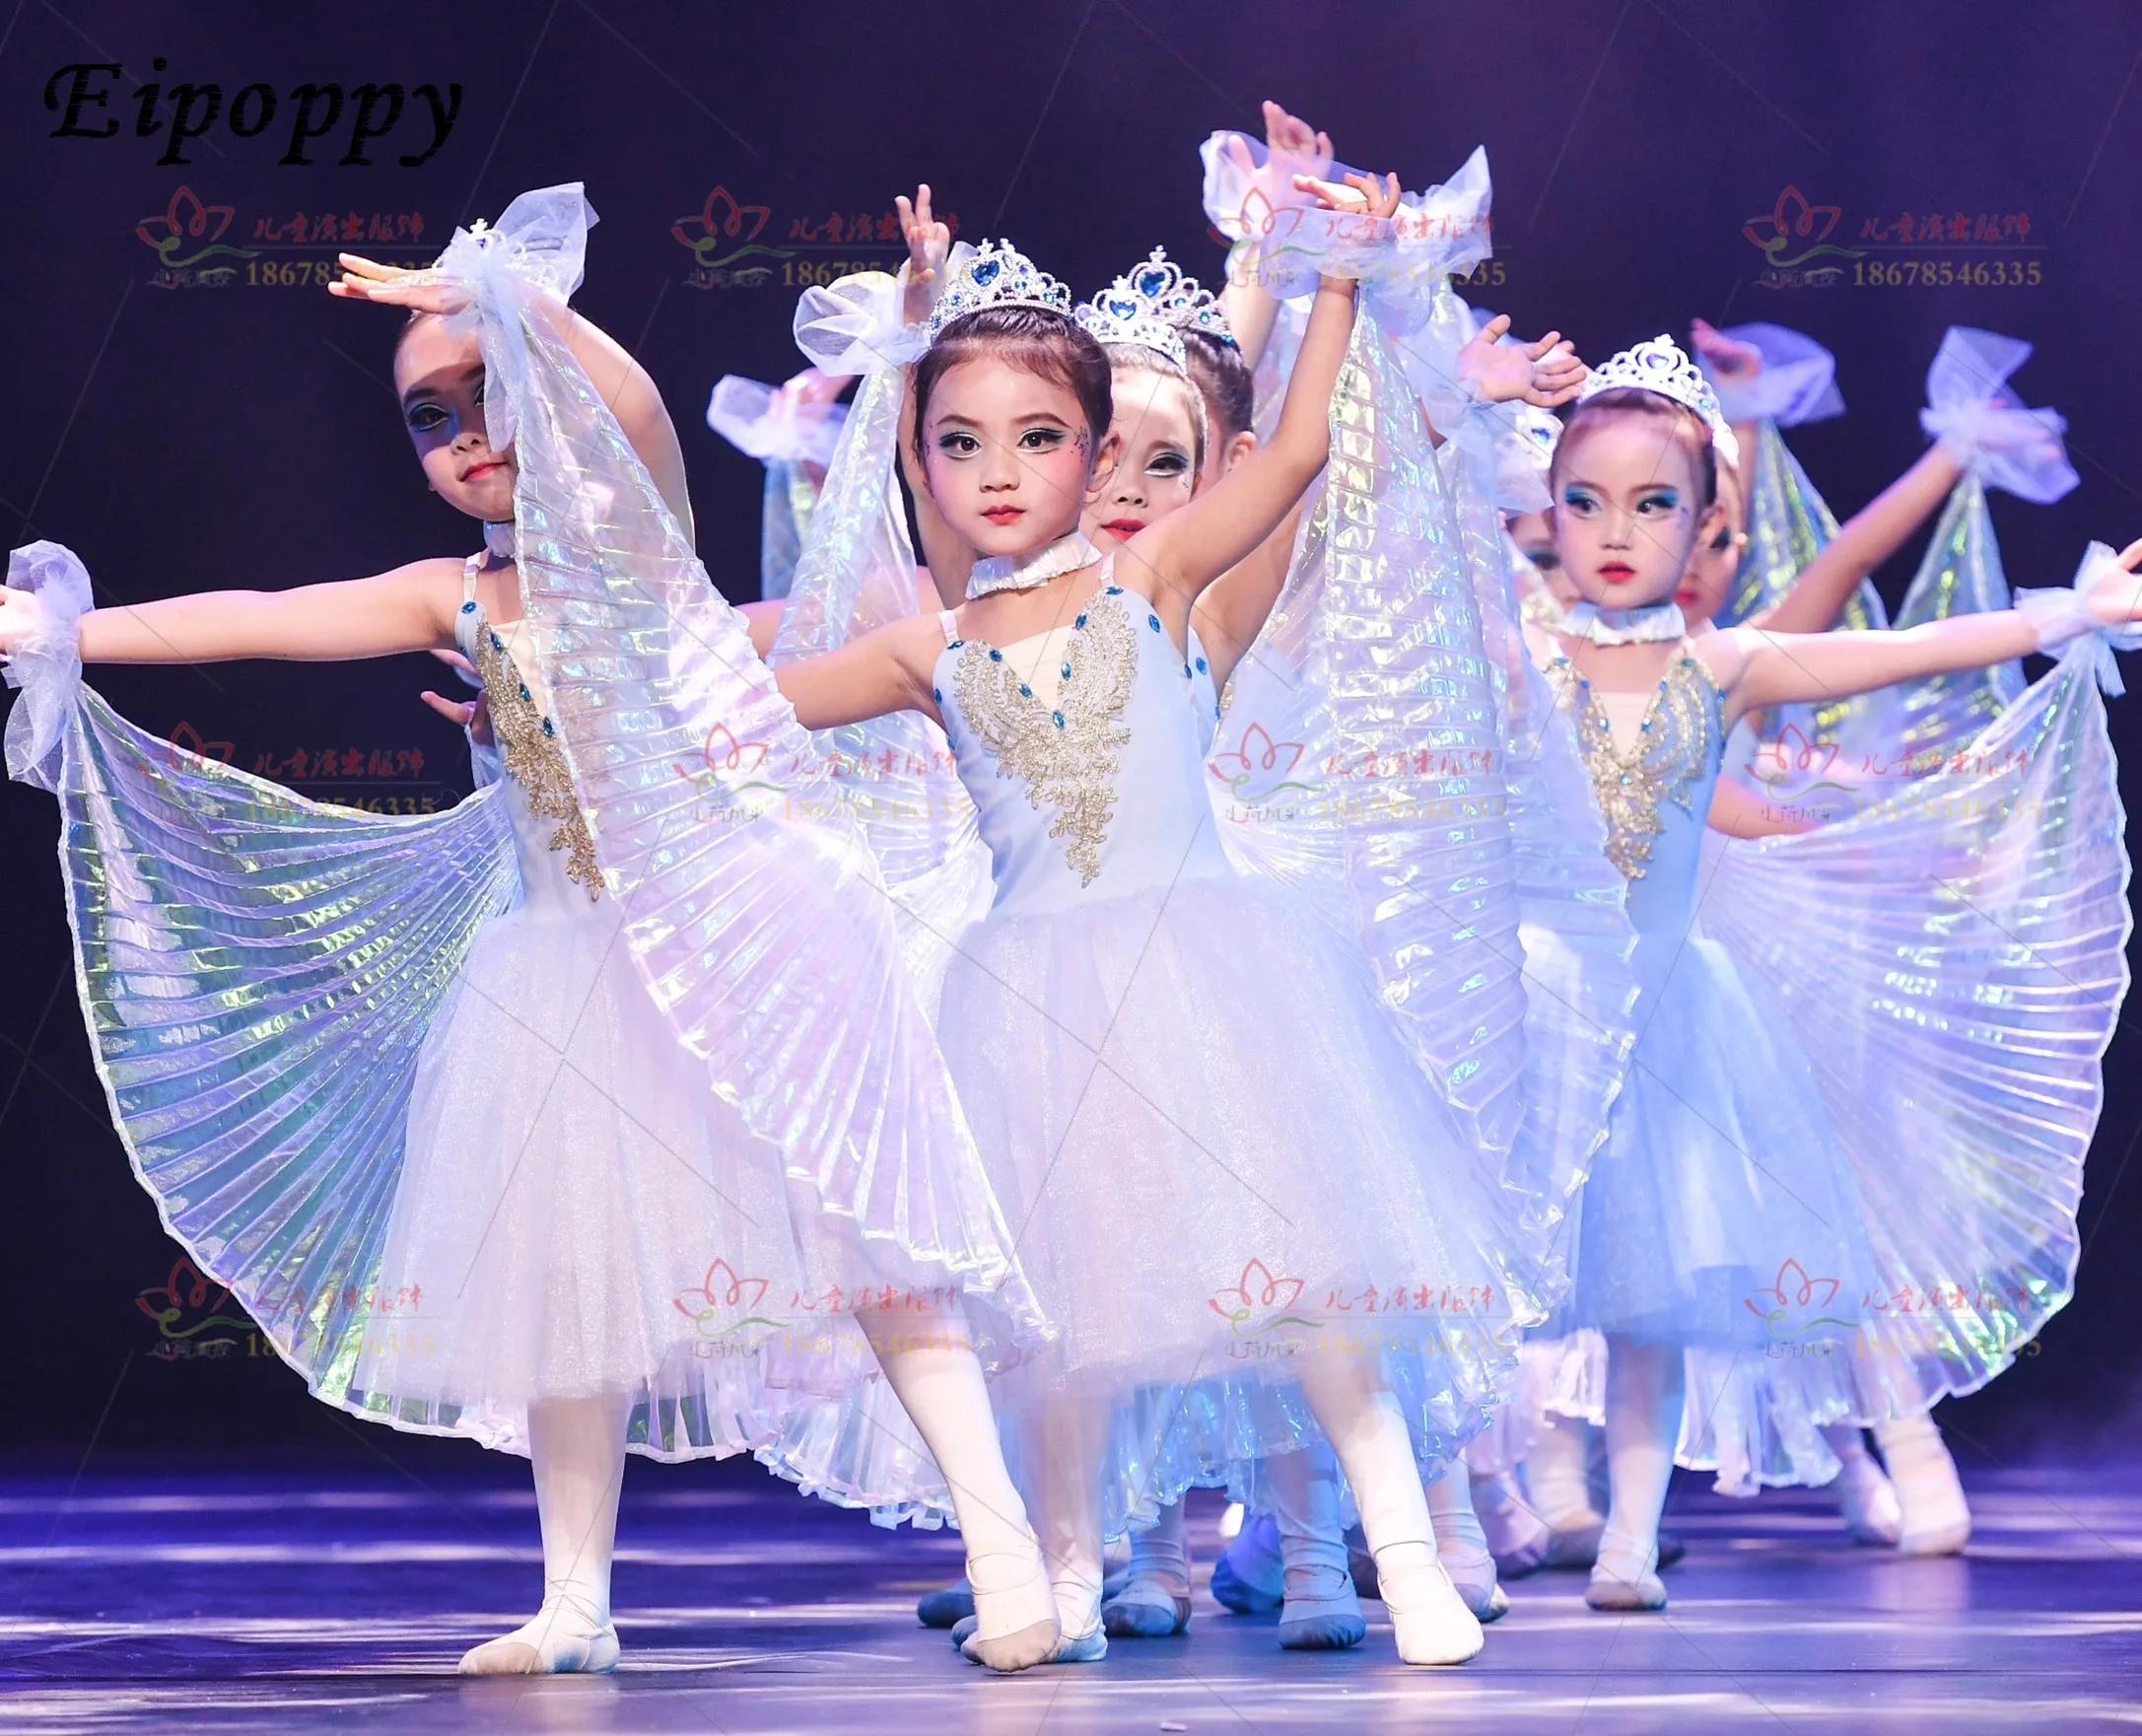 

Children's Dancing Clothes Wings Props Ballet Dance Costume Long Ballet Skirt New